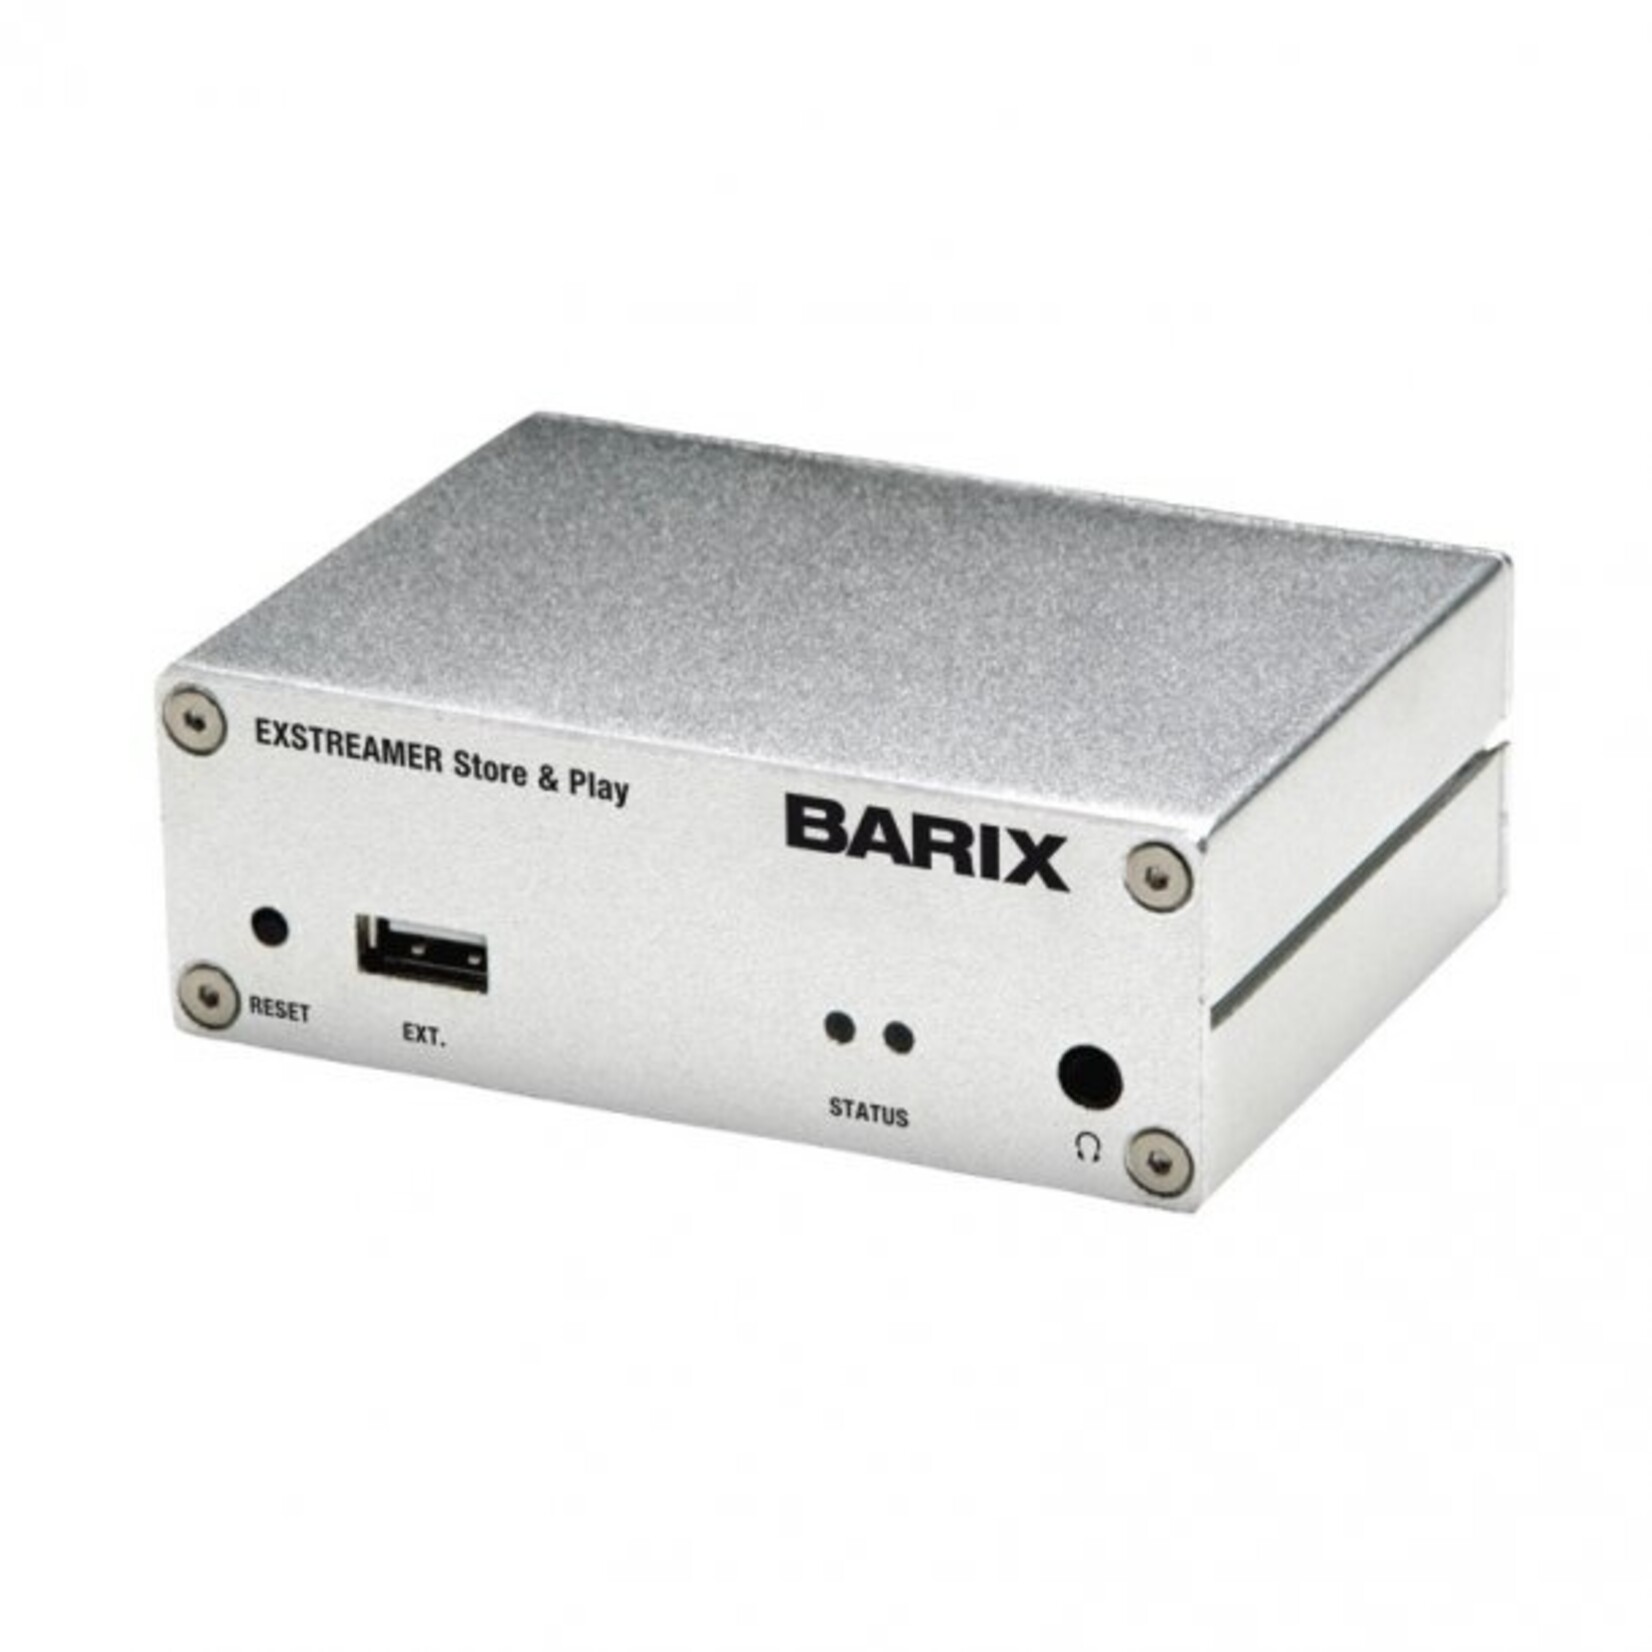 BARIX Exstreamer Store&Play+Streaming incl. 8 GB MicroSD card,  EU Package